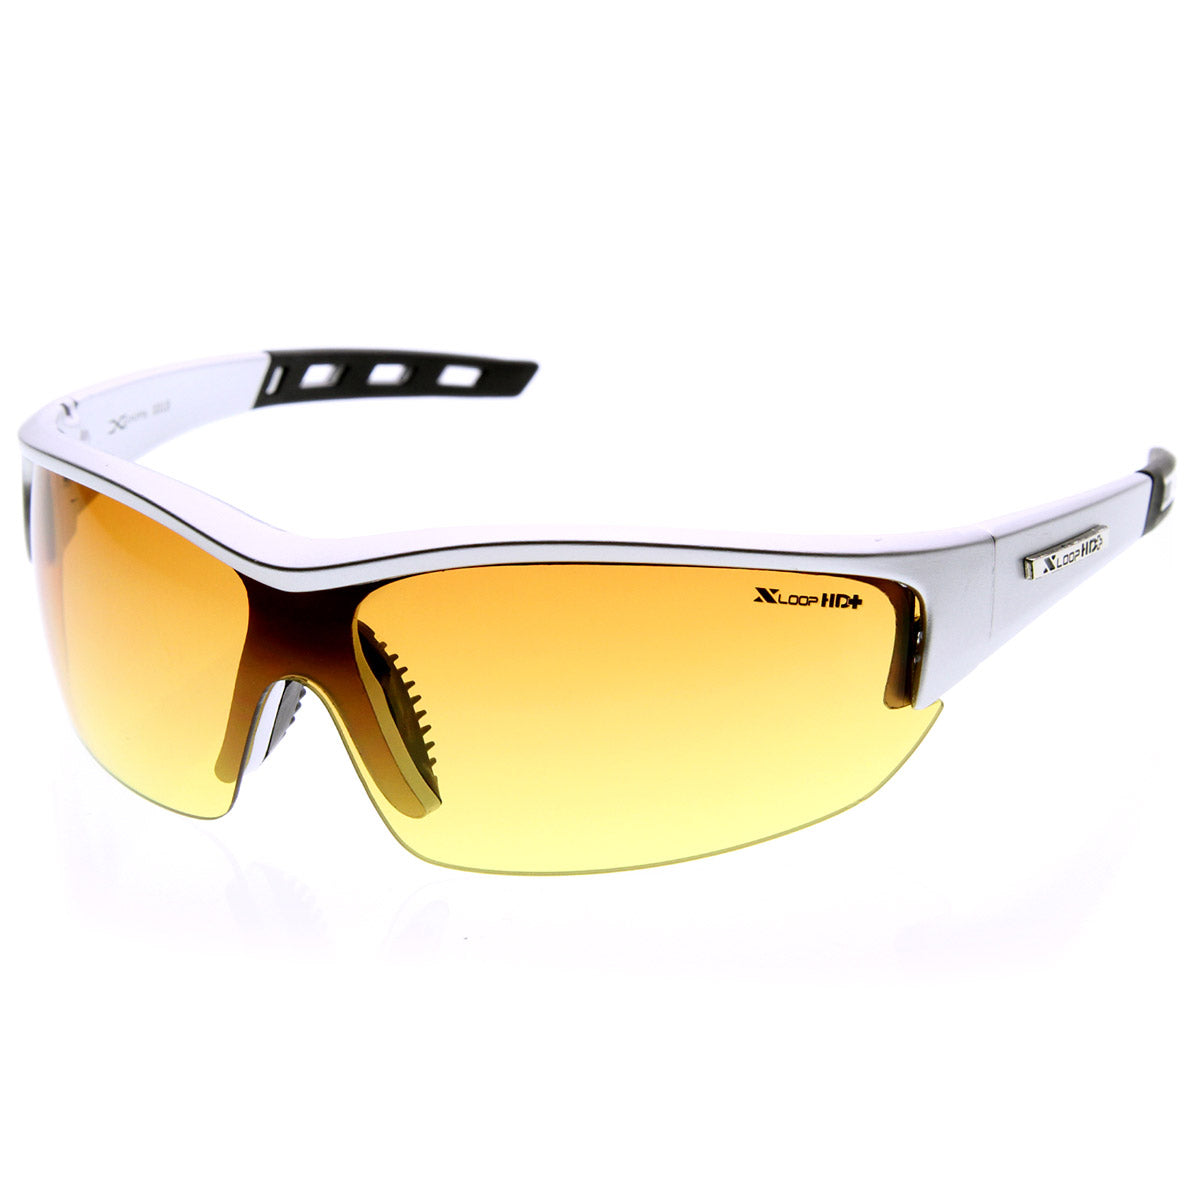 X Loop Hd Brand Eyewear Half Frame Anti Glare Lens Sports Frame Sungla Sunglass La